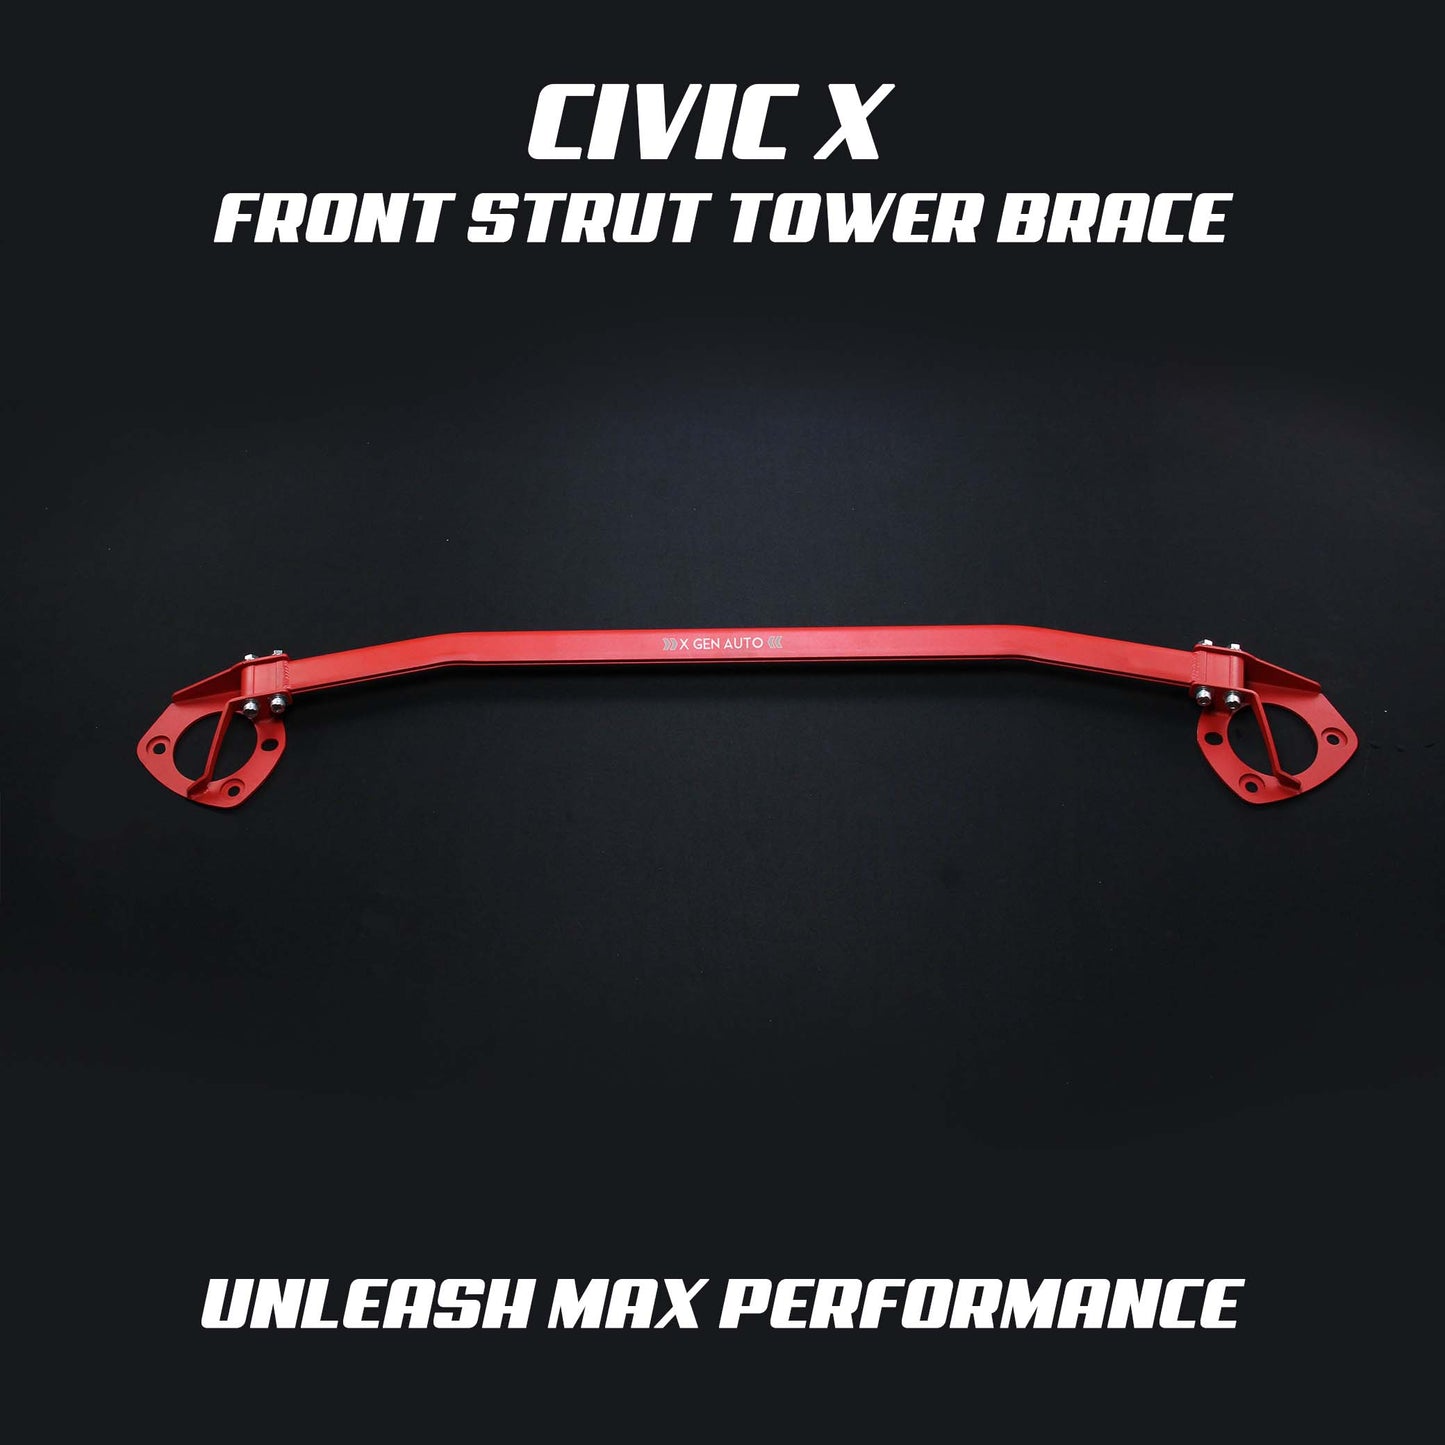 [CIVIC X] FRONT STRUT TOWER BRACE